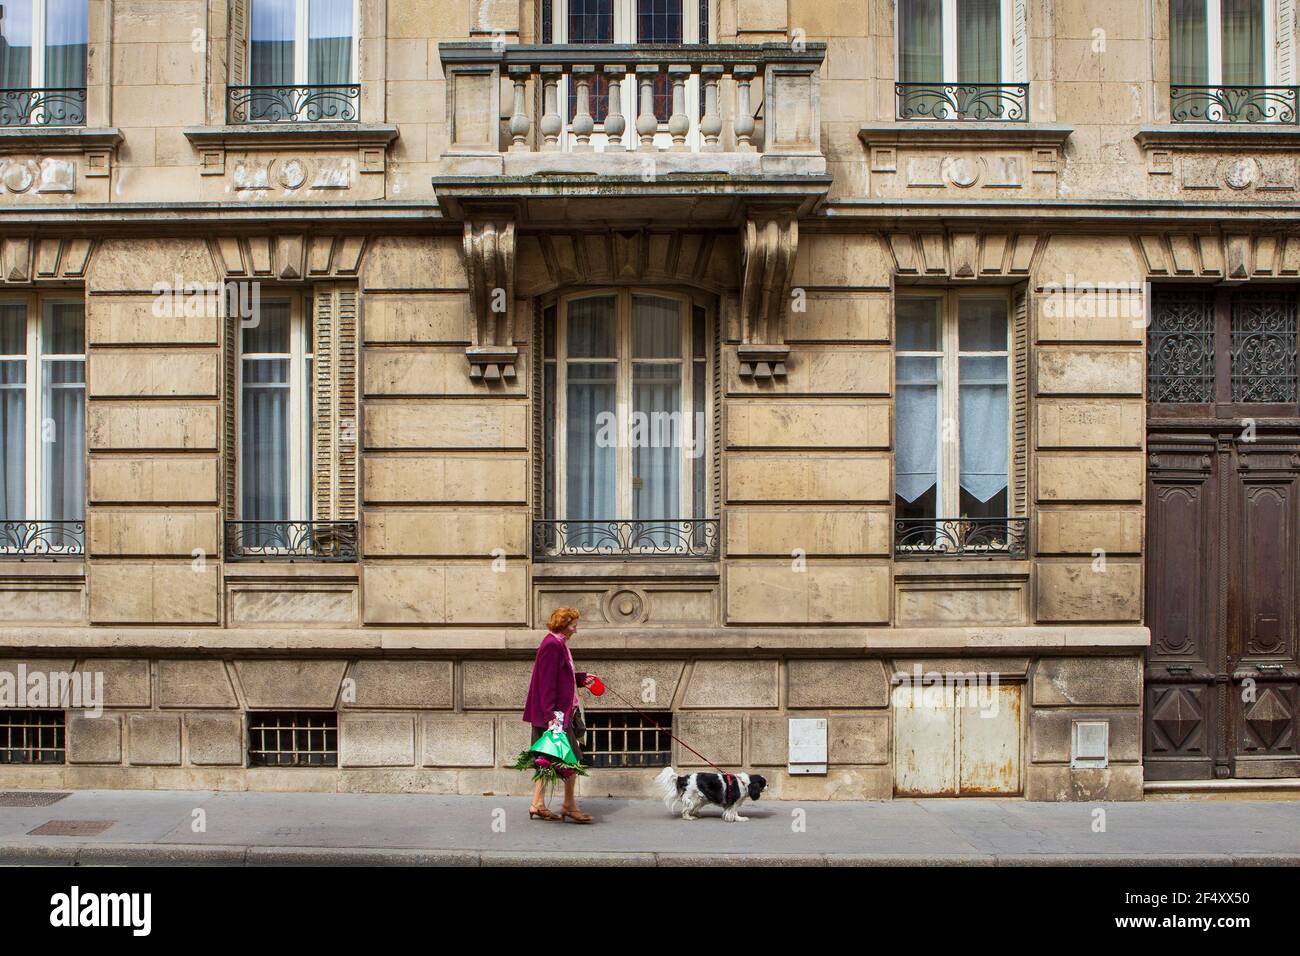 Woman walking dog Banque D'Images